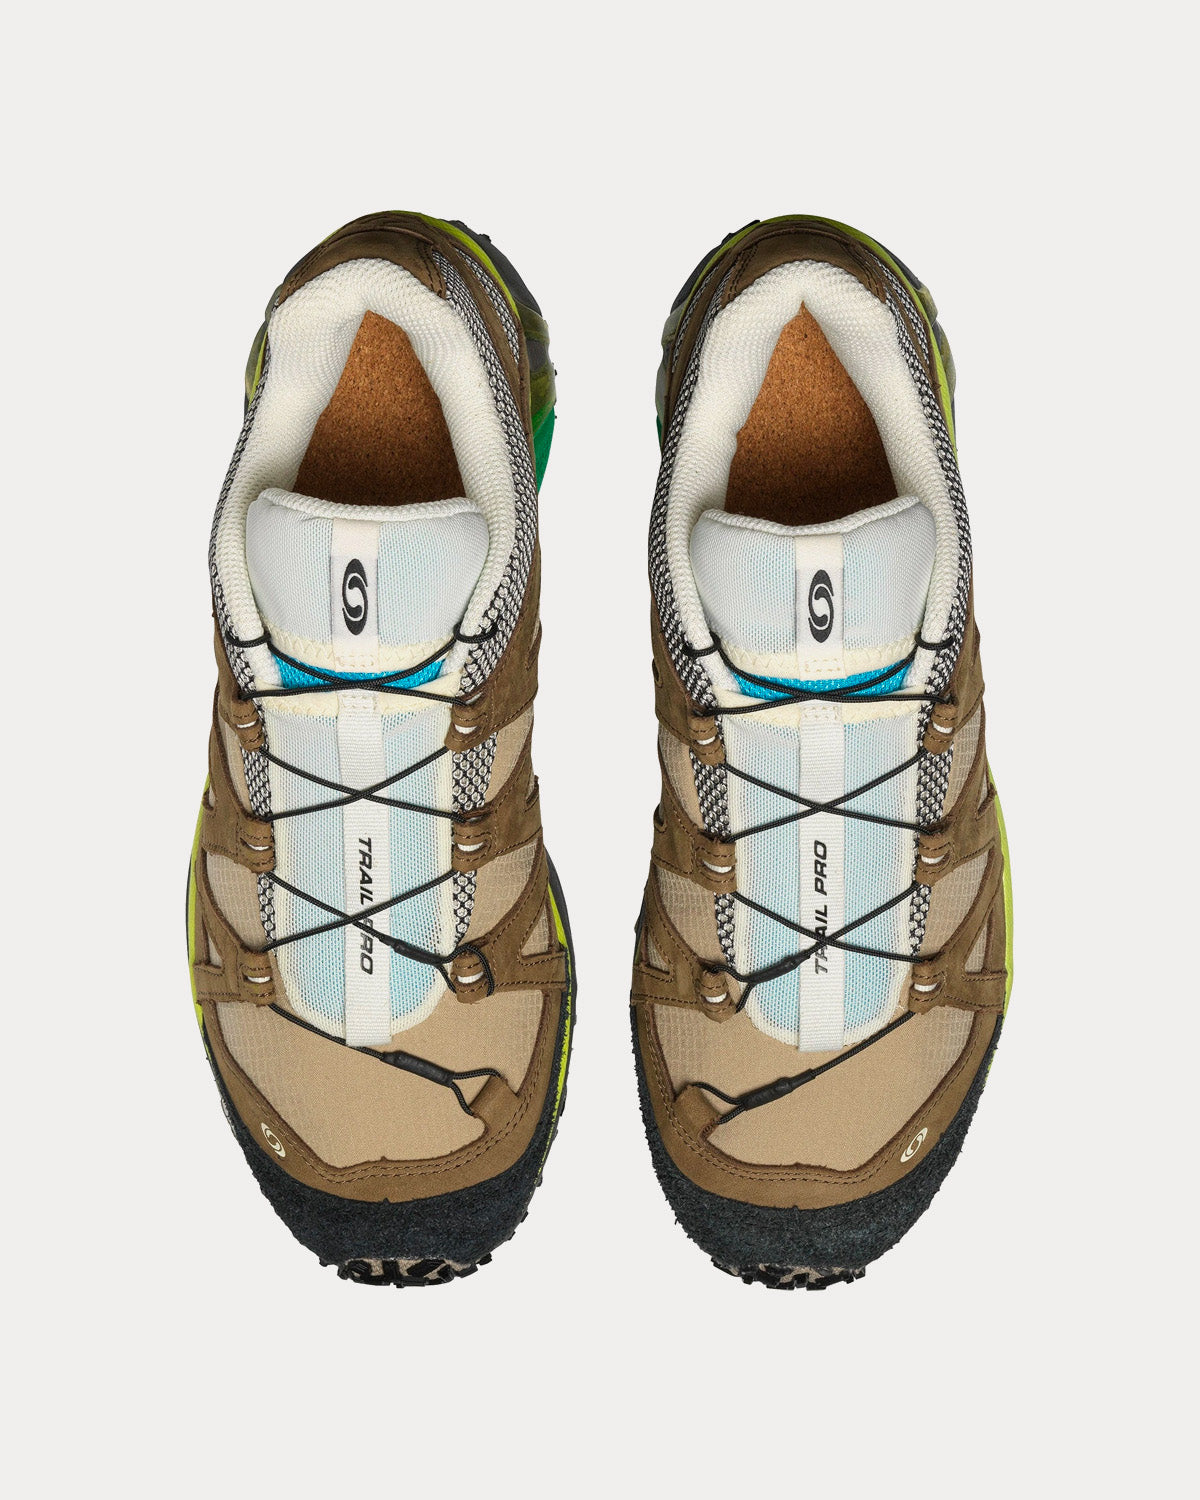 Salomon x The Broken Arm - Trail Pro Chinchilla / Teak / Acid Lime Low Top Sneakers